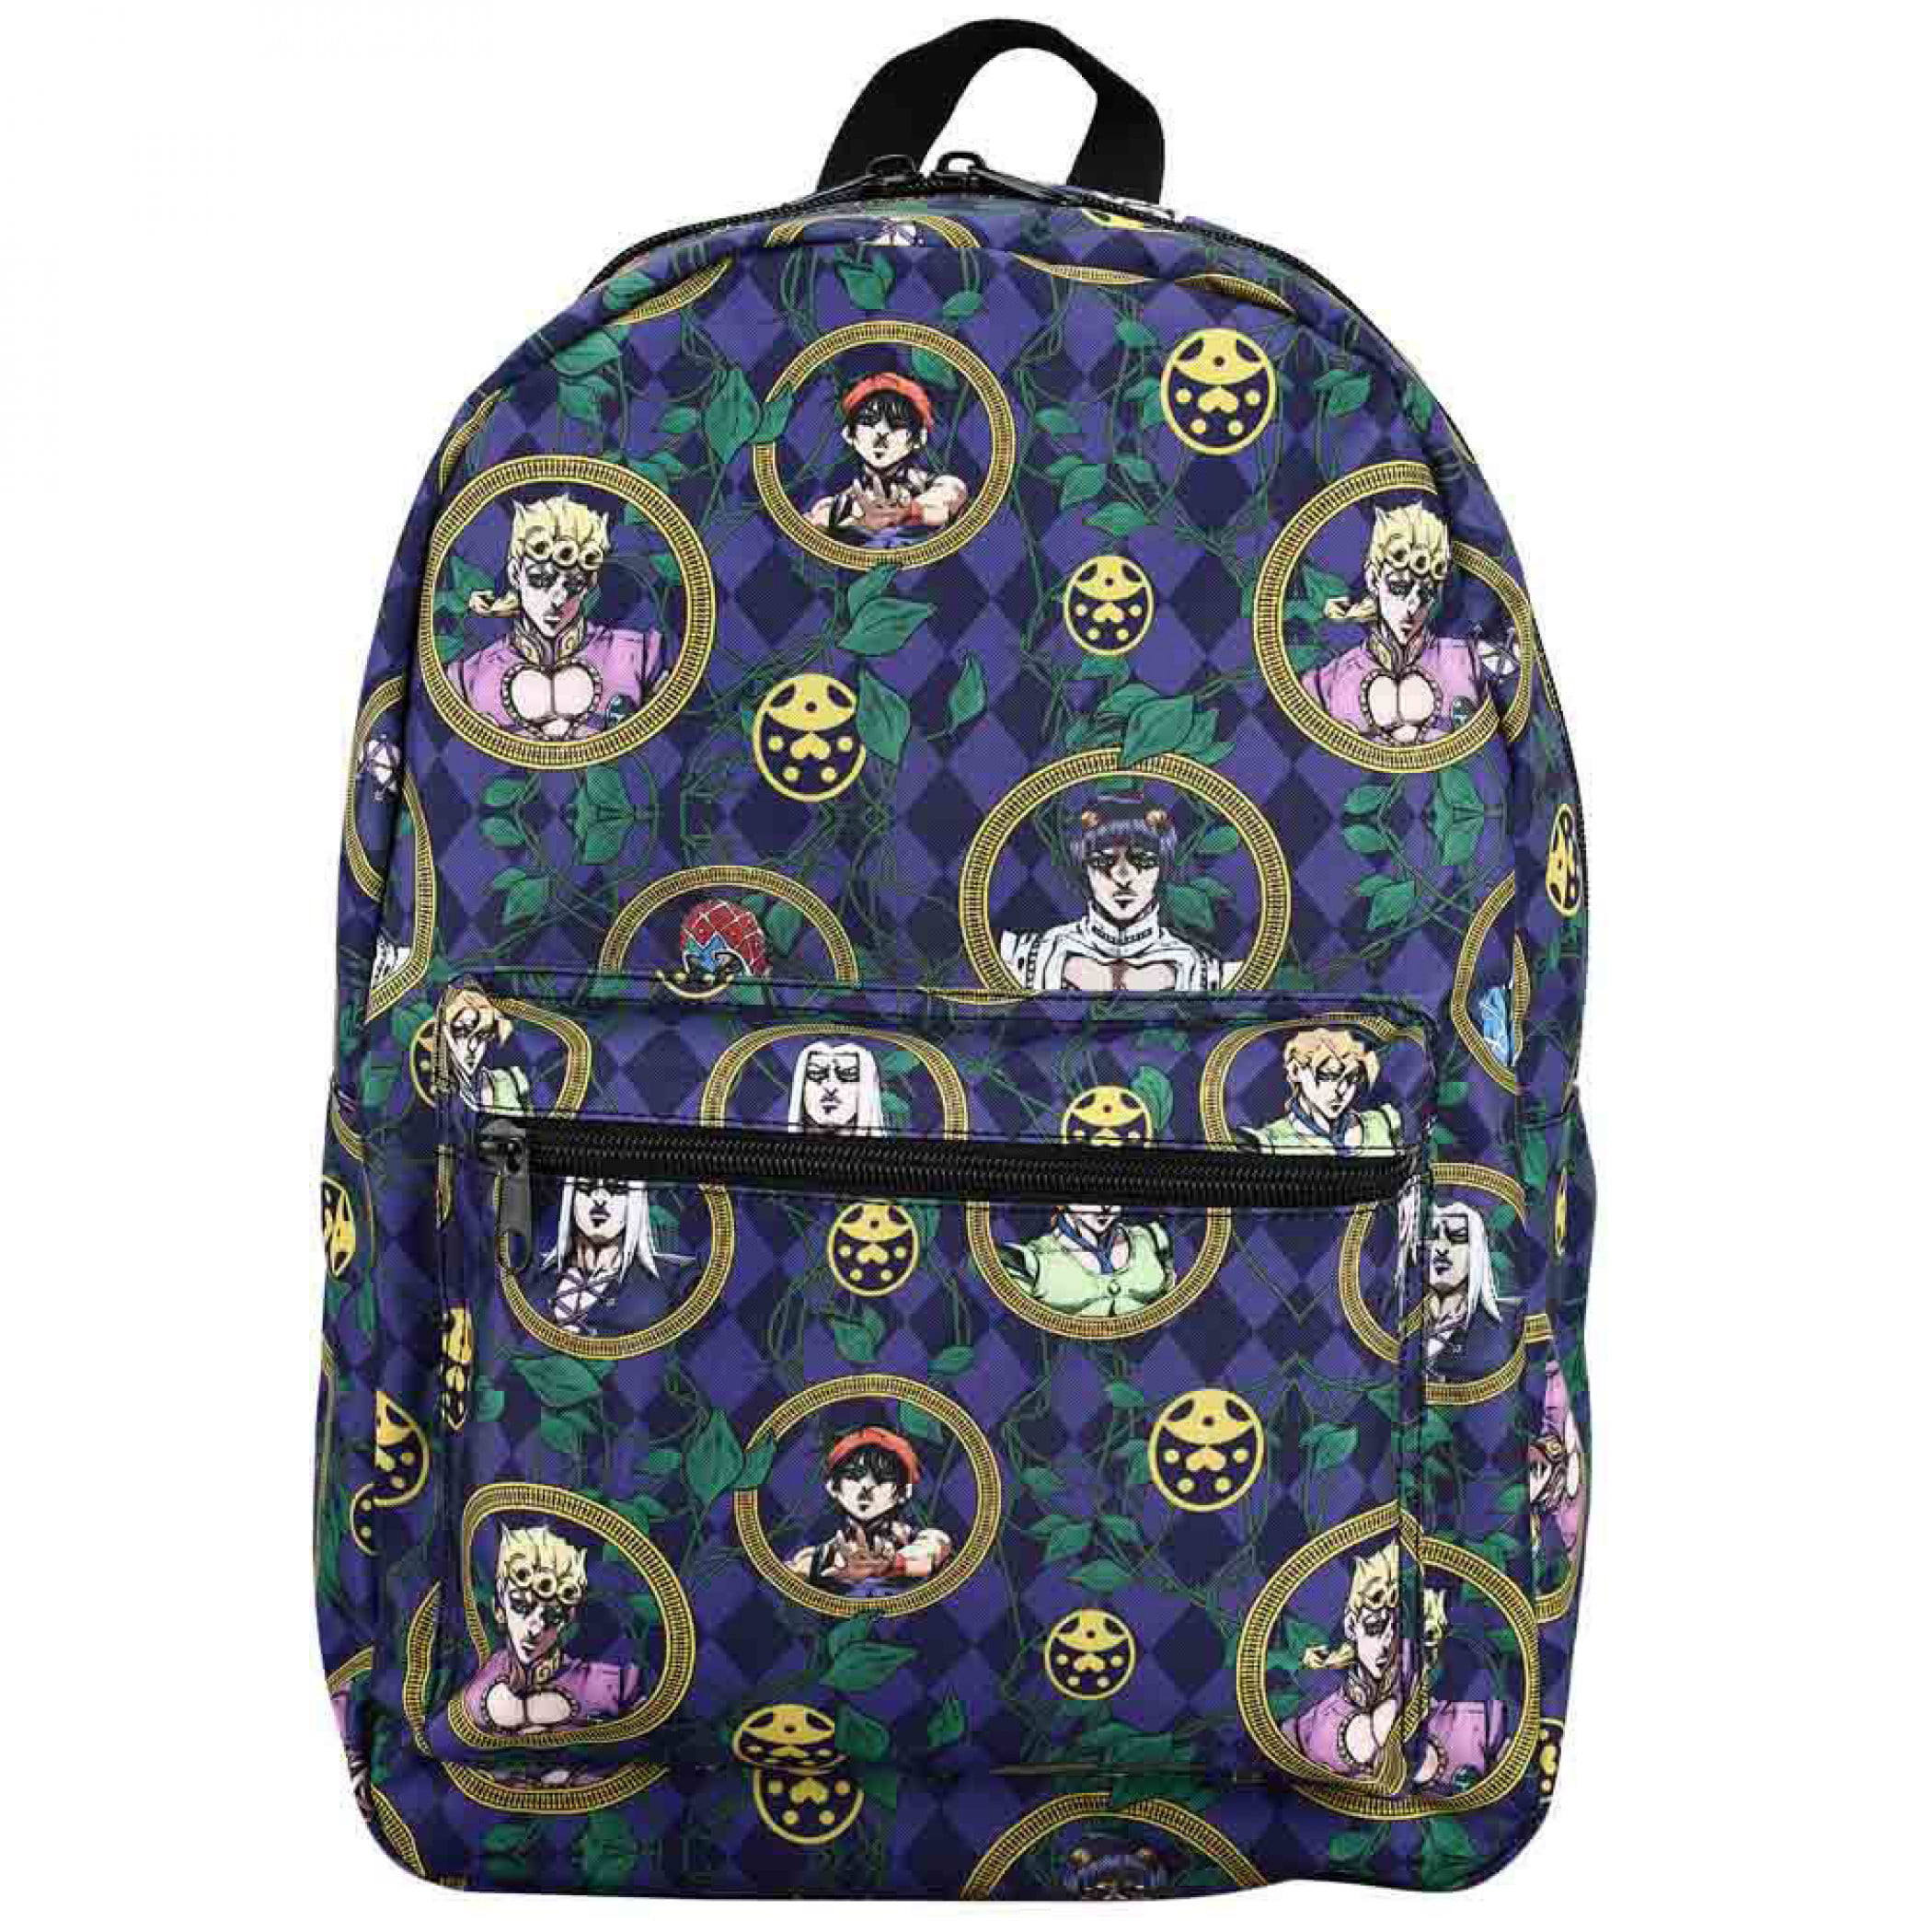 JojoS Bizarre A_Dventure Lightweight Backpack Kids Schoolbag Boy & Girl Teens Student Schoolbag Daily Leisure Backpack 